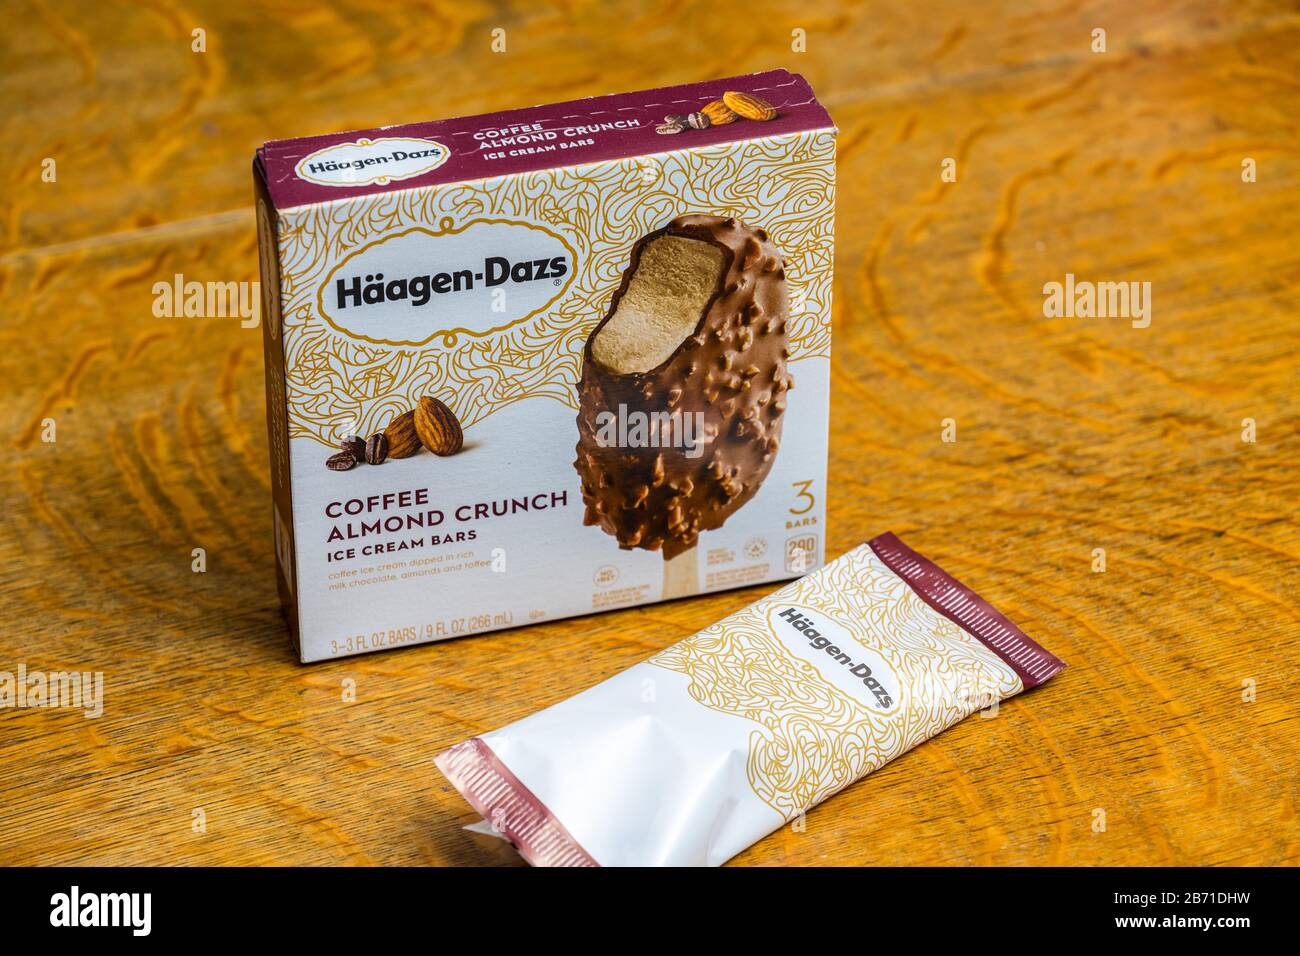 Haagen Dazs Coffee Almond ice cream bars Stock Photo